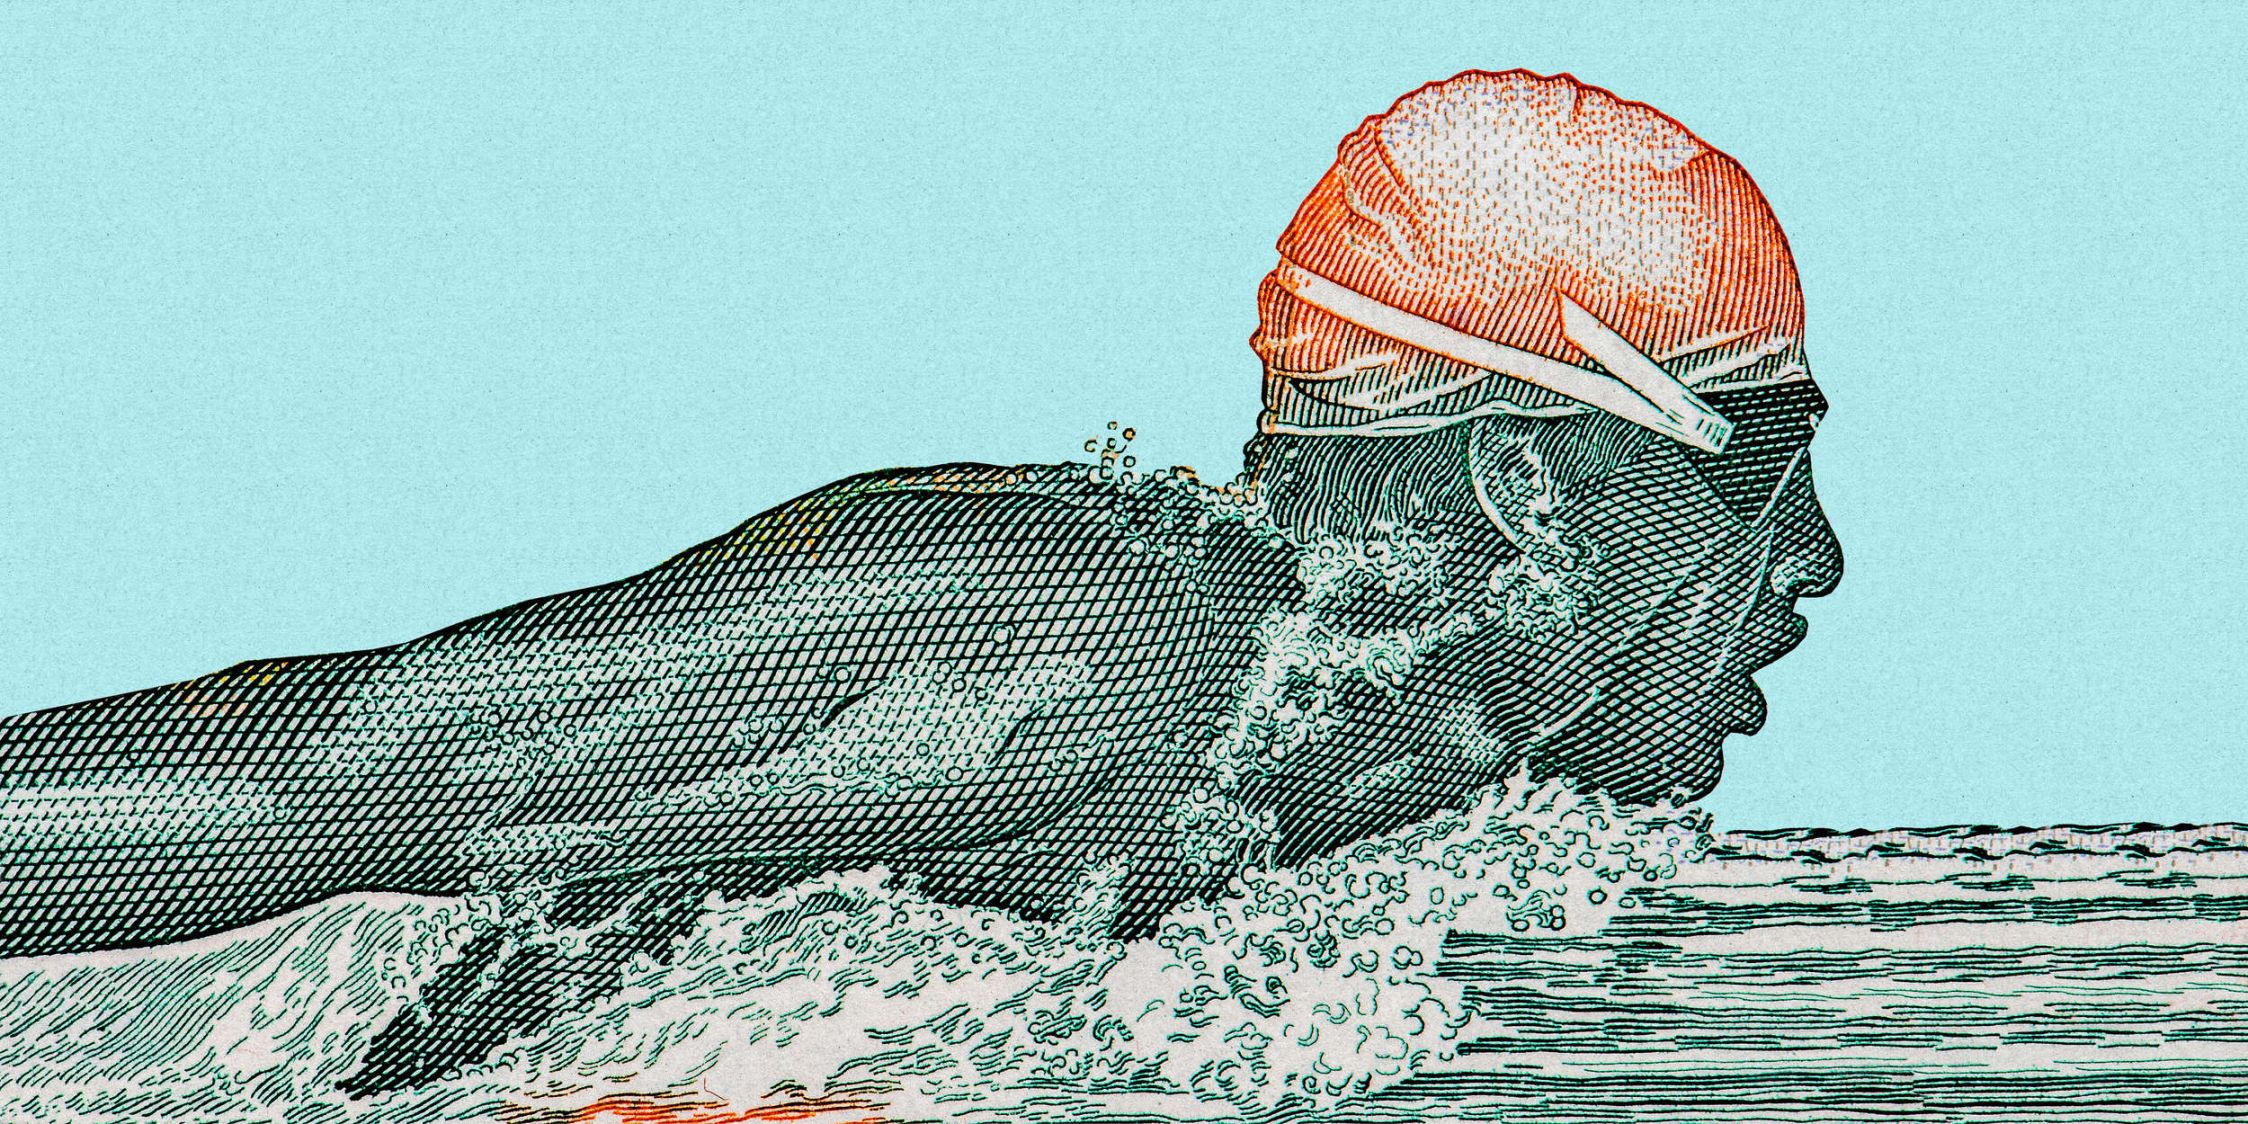             Fotomurali »aquaman« - Disegno del nuotatore in pixel - benzina con texture in carta kraft | Materiali non tessuto premium liscio e leggermente lucido
        